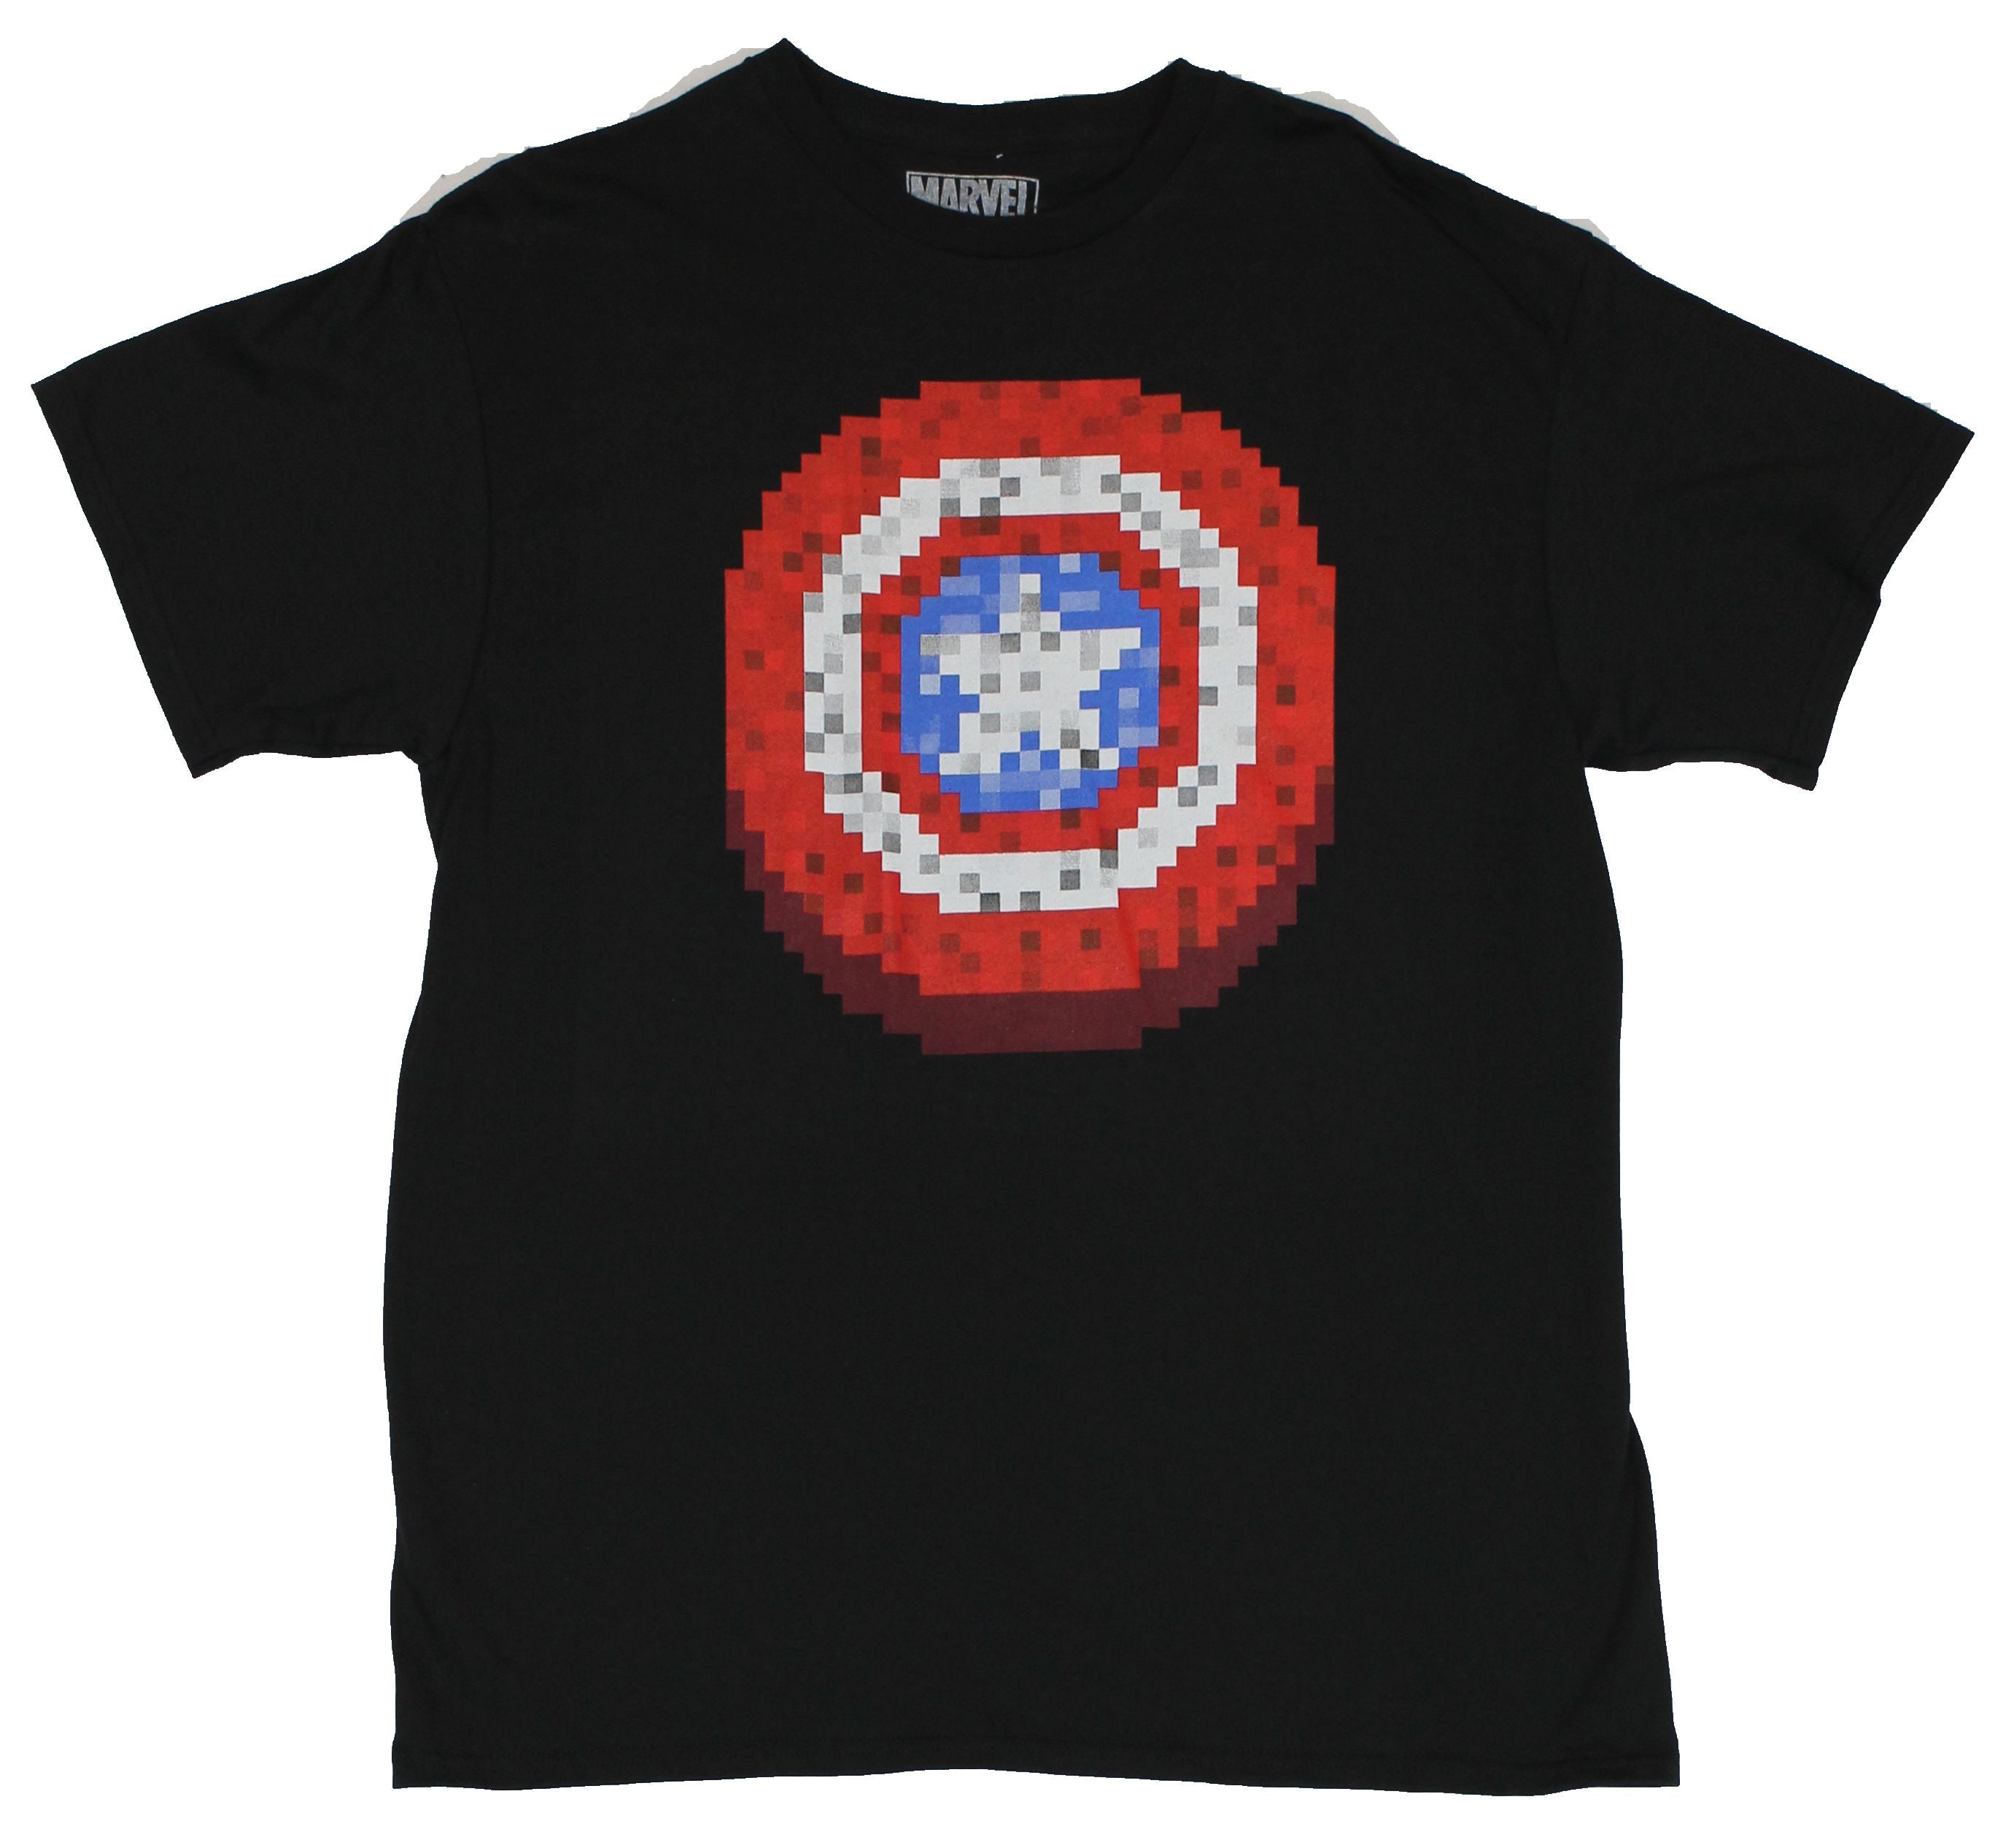 Captain America (Marvel Comics) Mens T-Shirt -  8-Bit Style Shield Logo Image